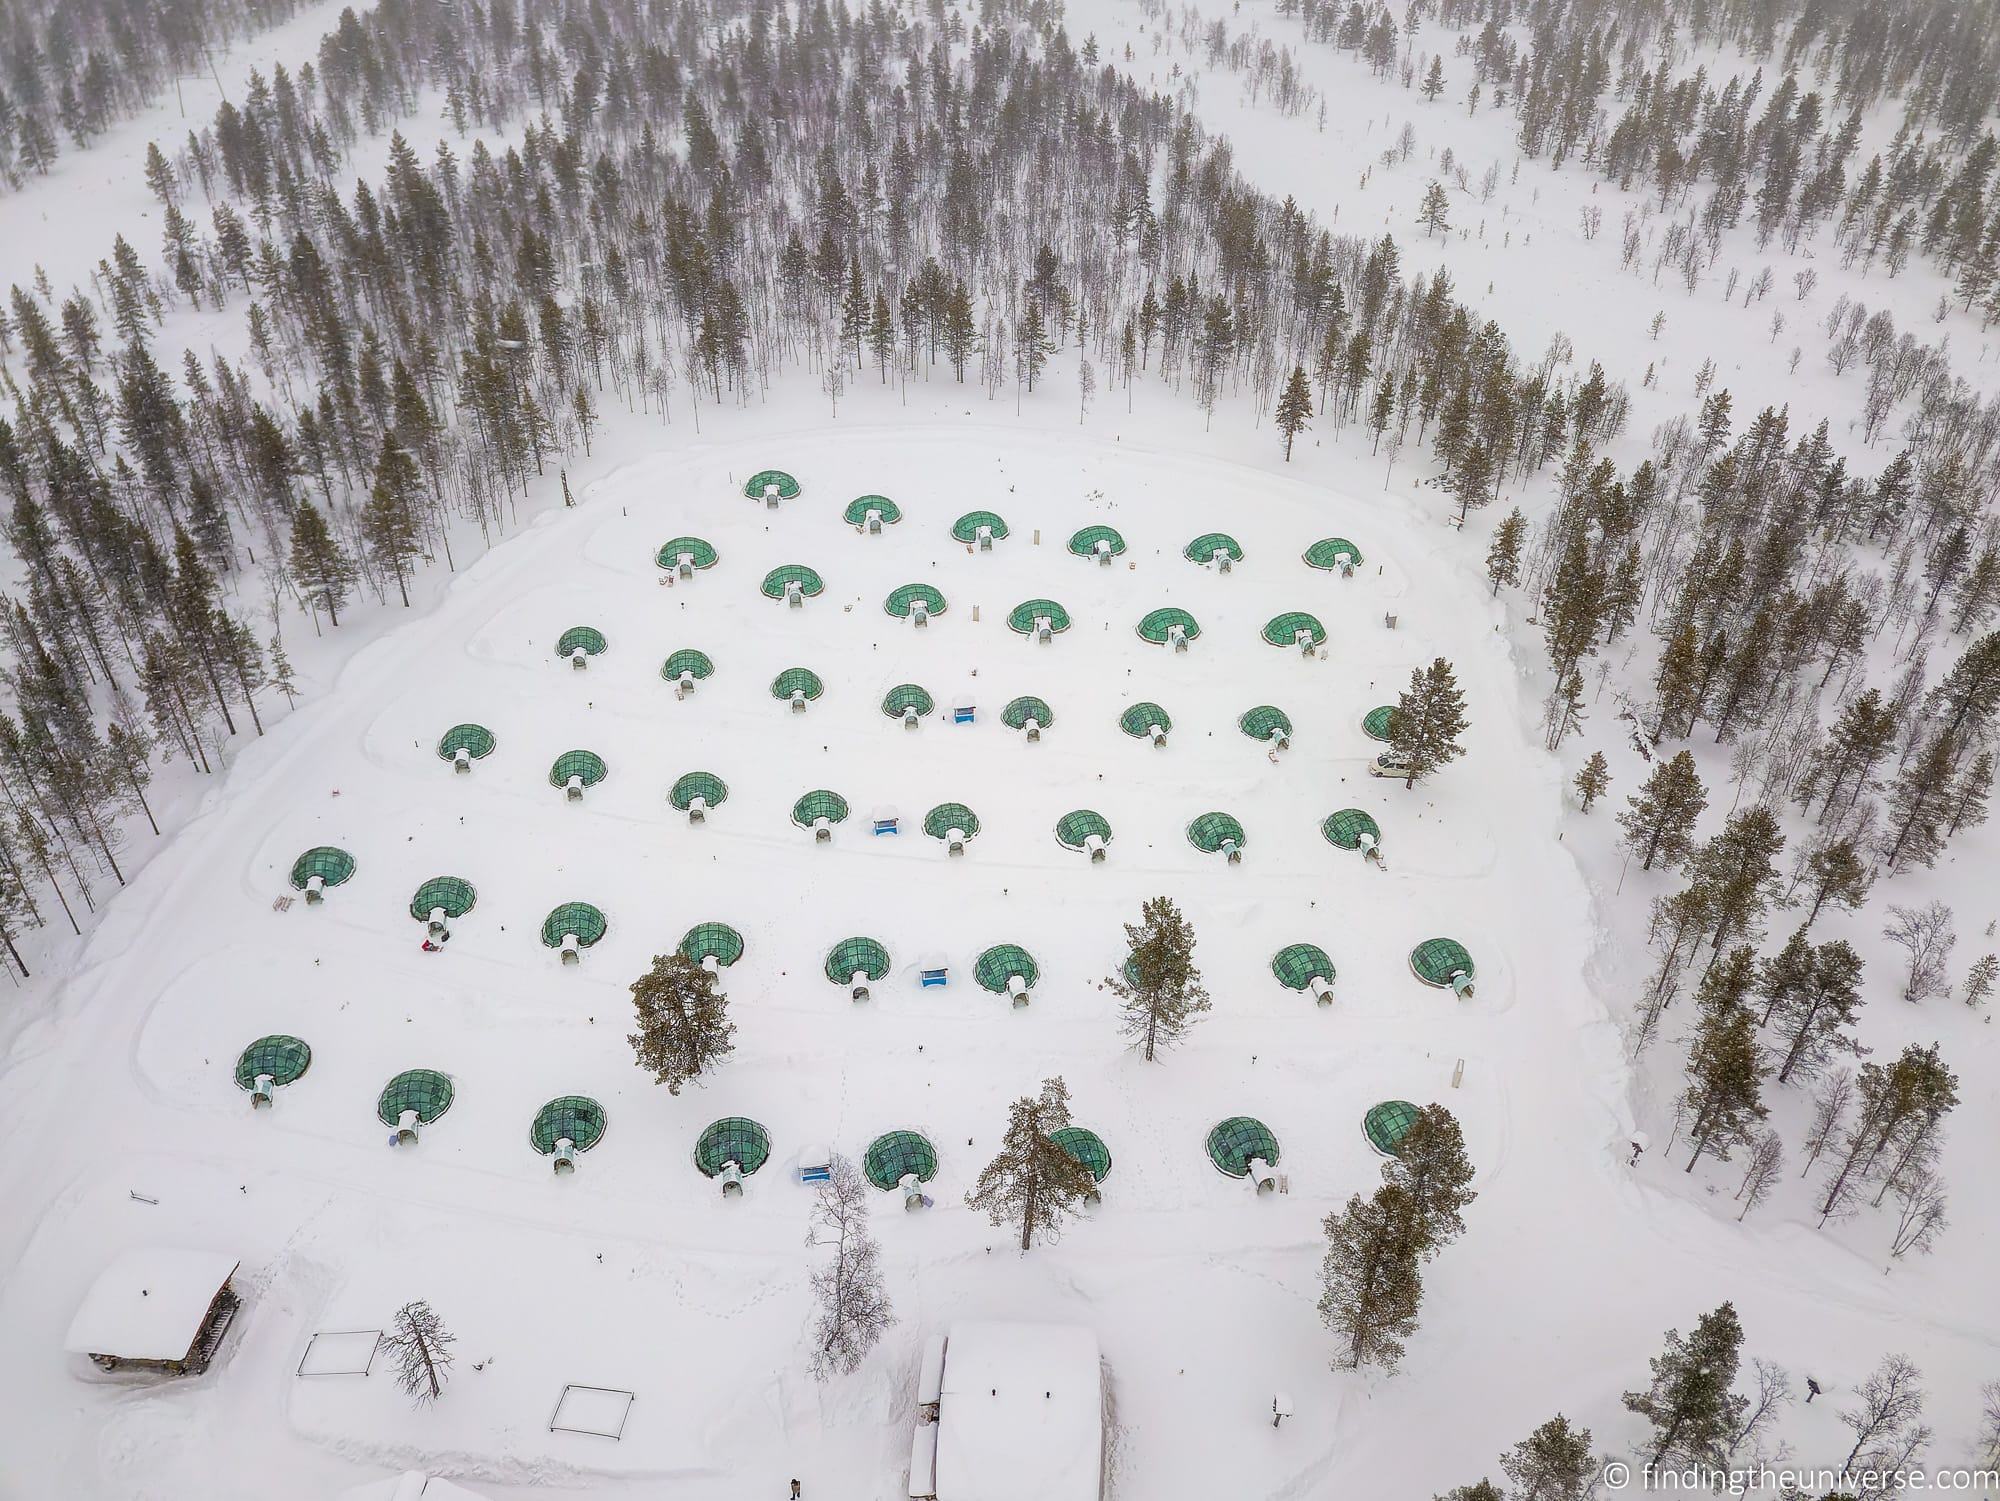 Kakslauttanen Arctic Resort - west village glass igloos